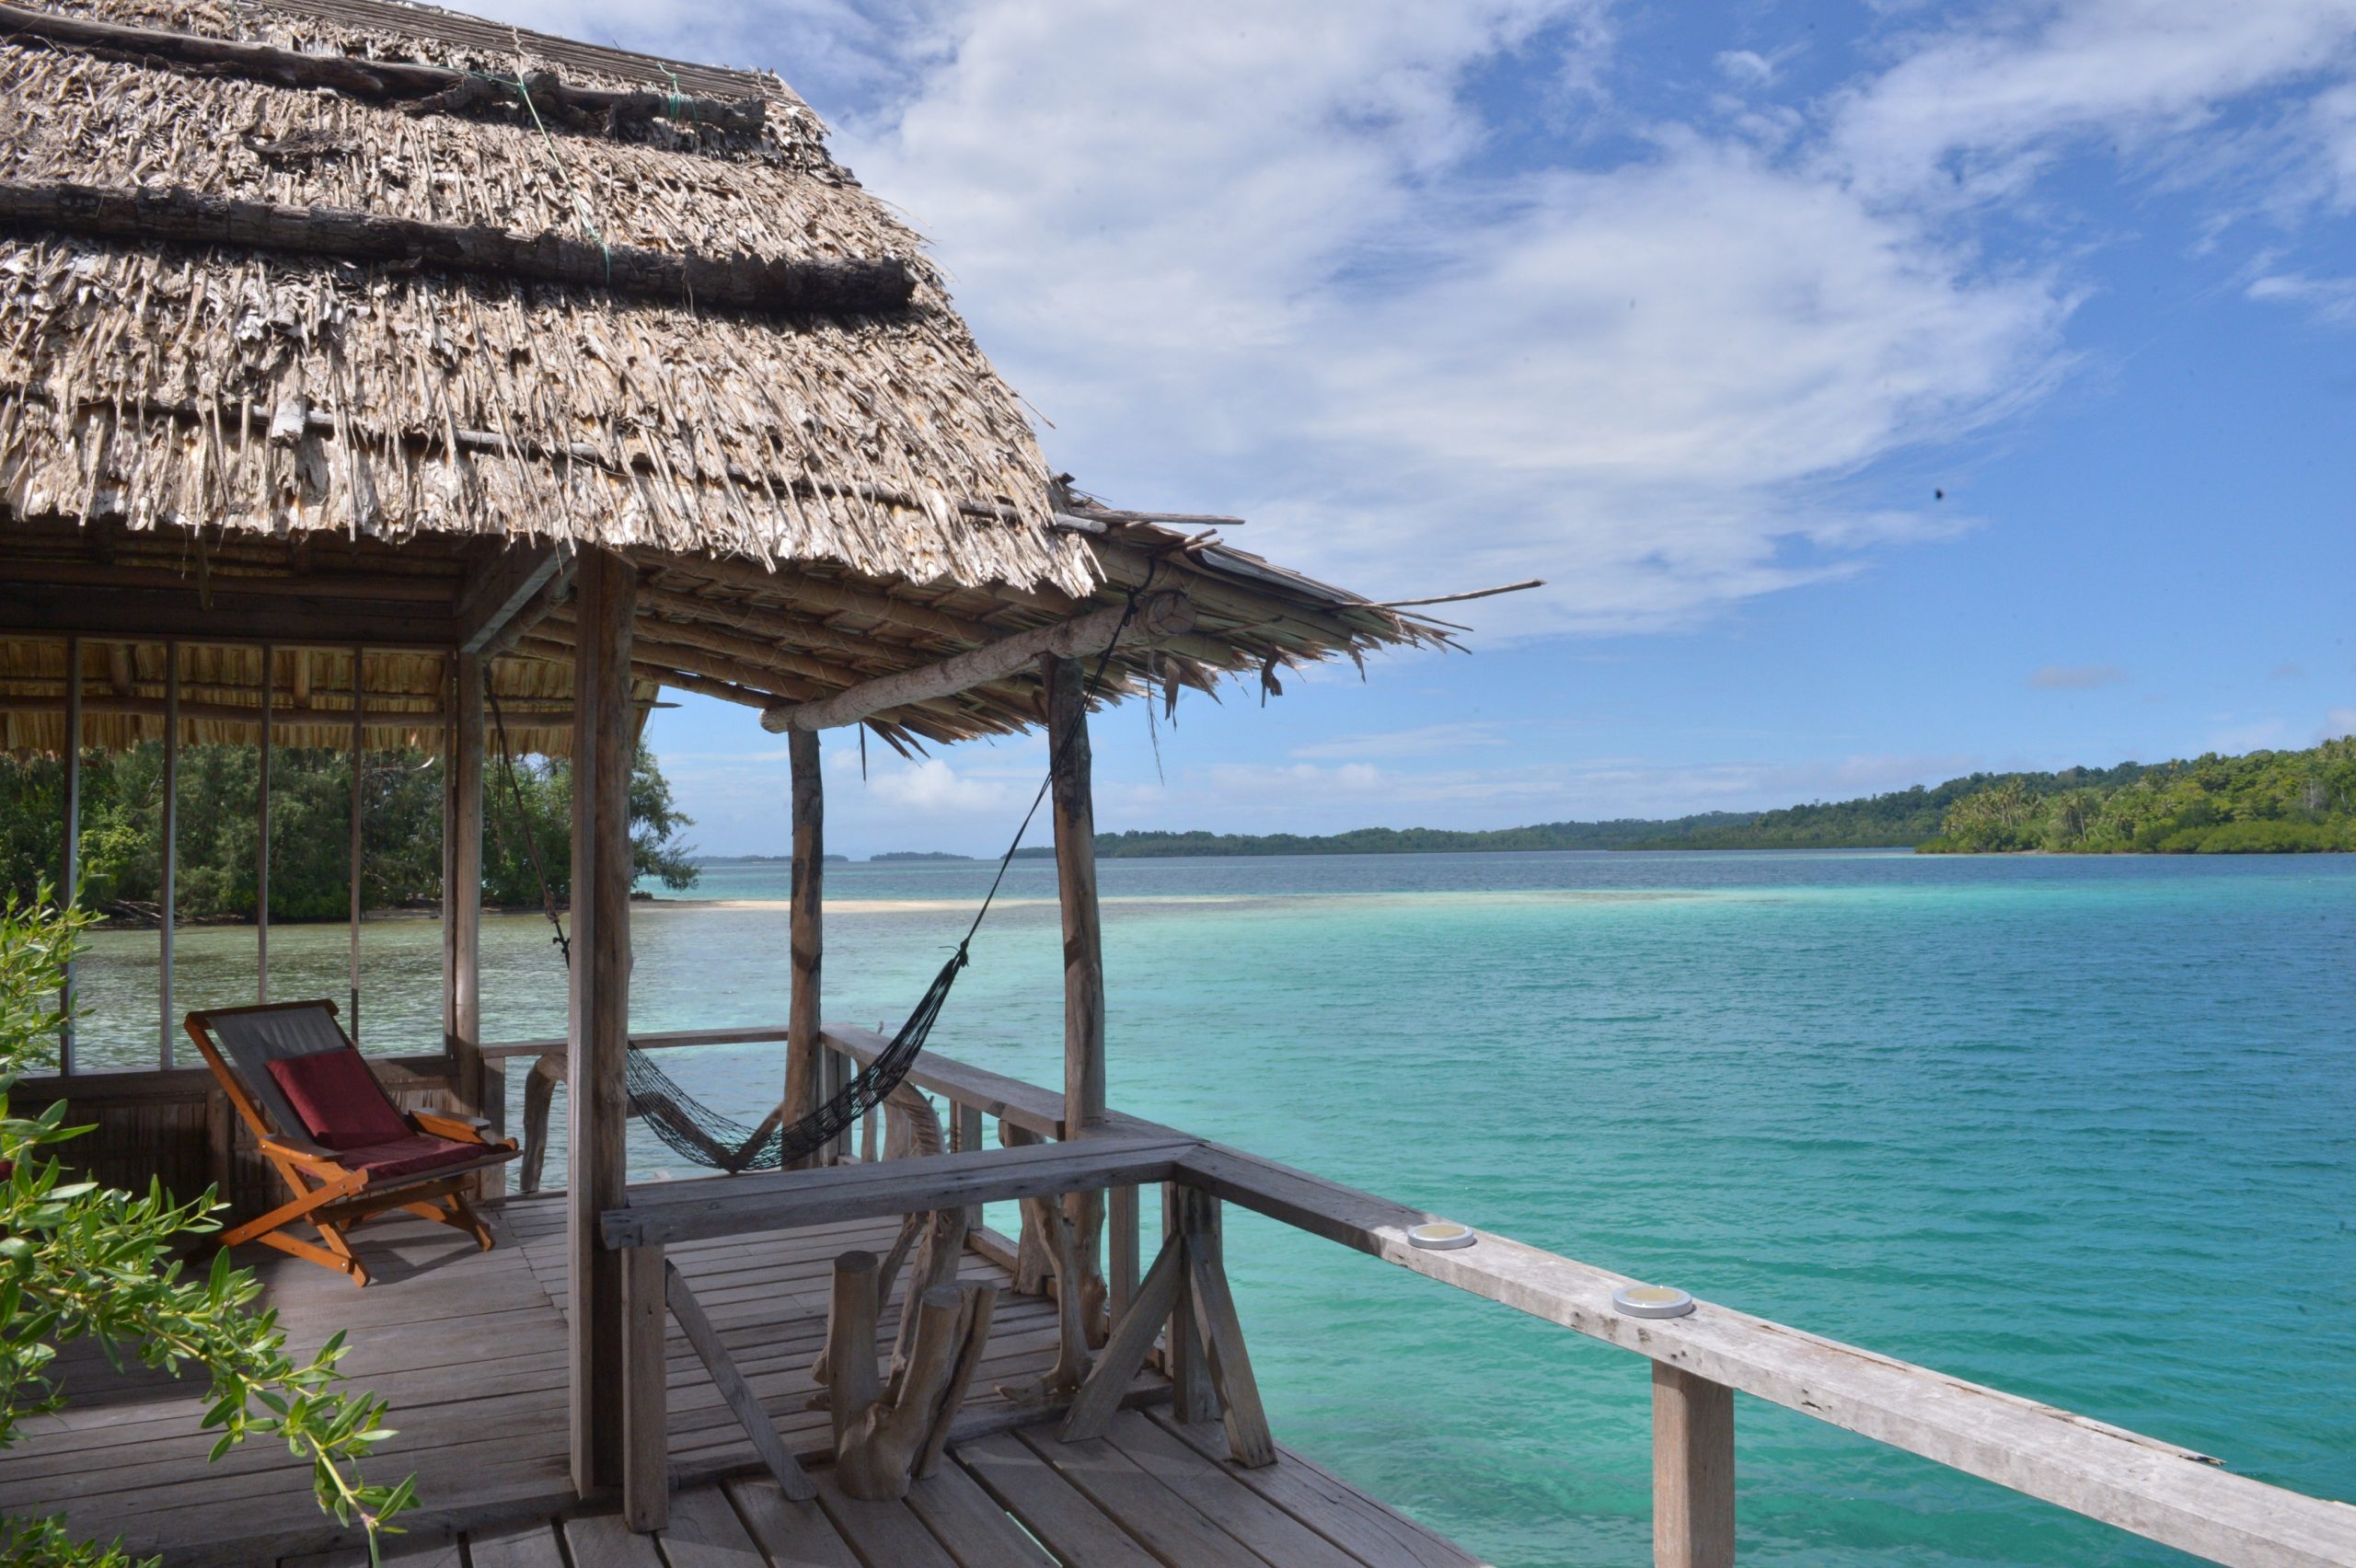 AU Government reviews travel advice for Solomon Islands